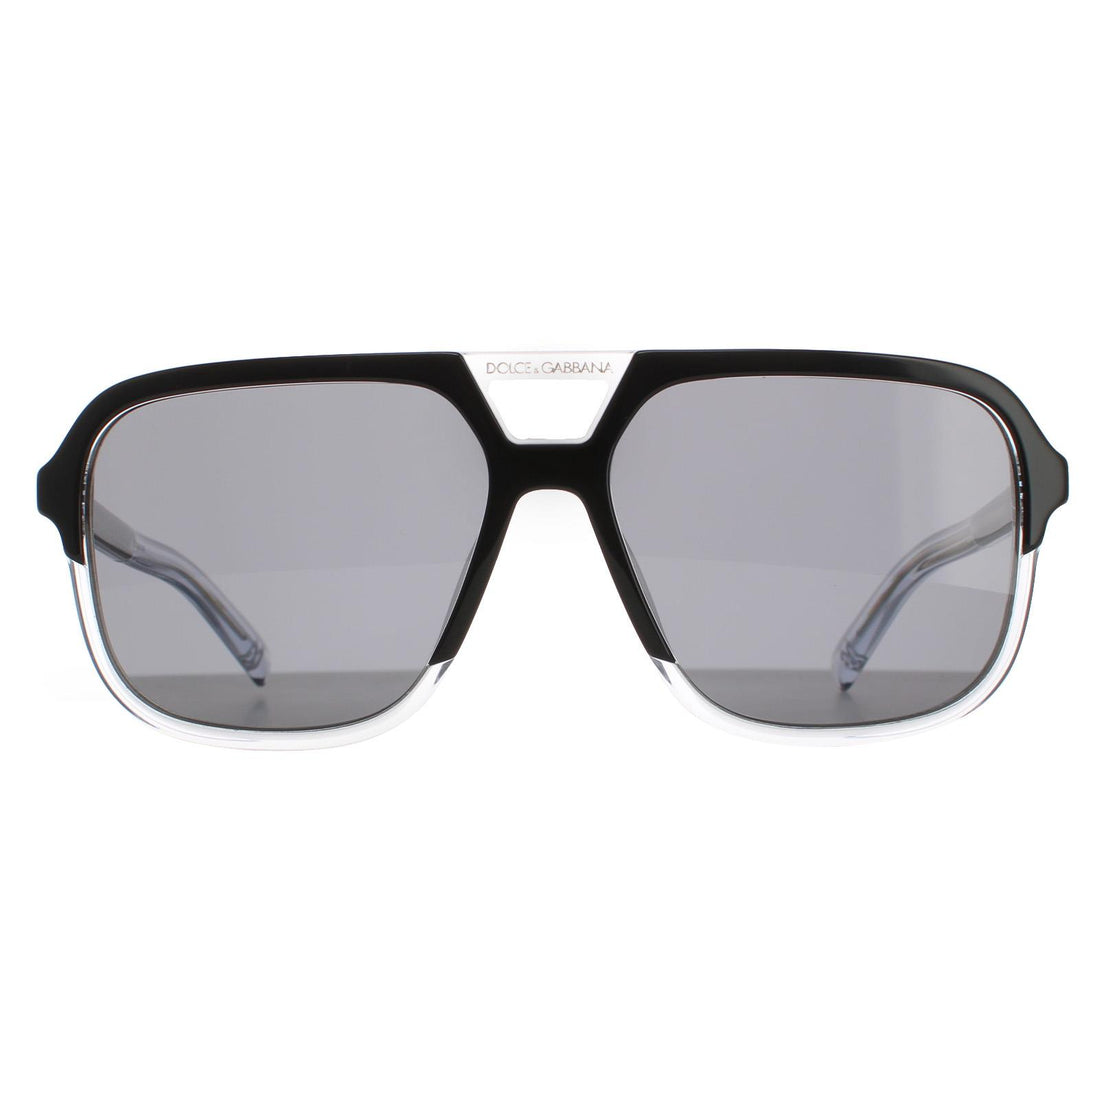 Dolce & Gabbana DG4354 Sunglasses Top Black on Crystal / Dark Grey Polarised